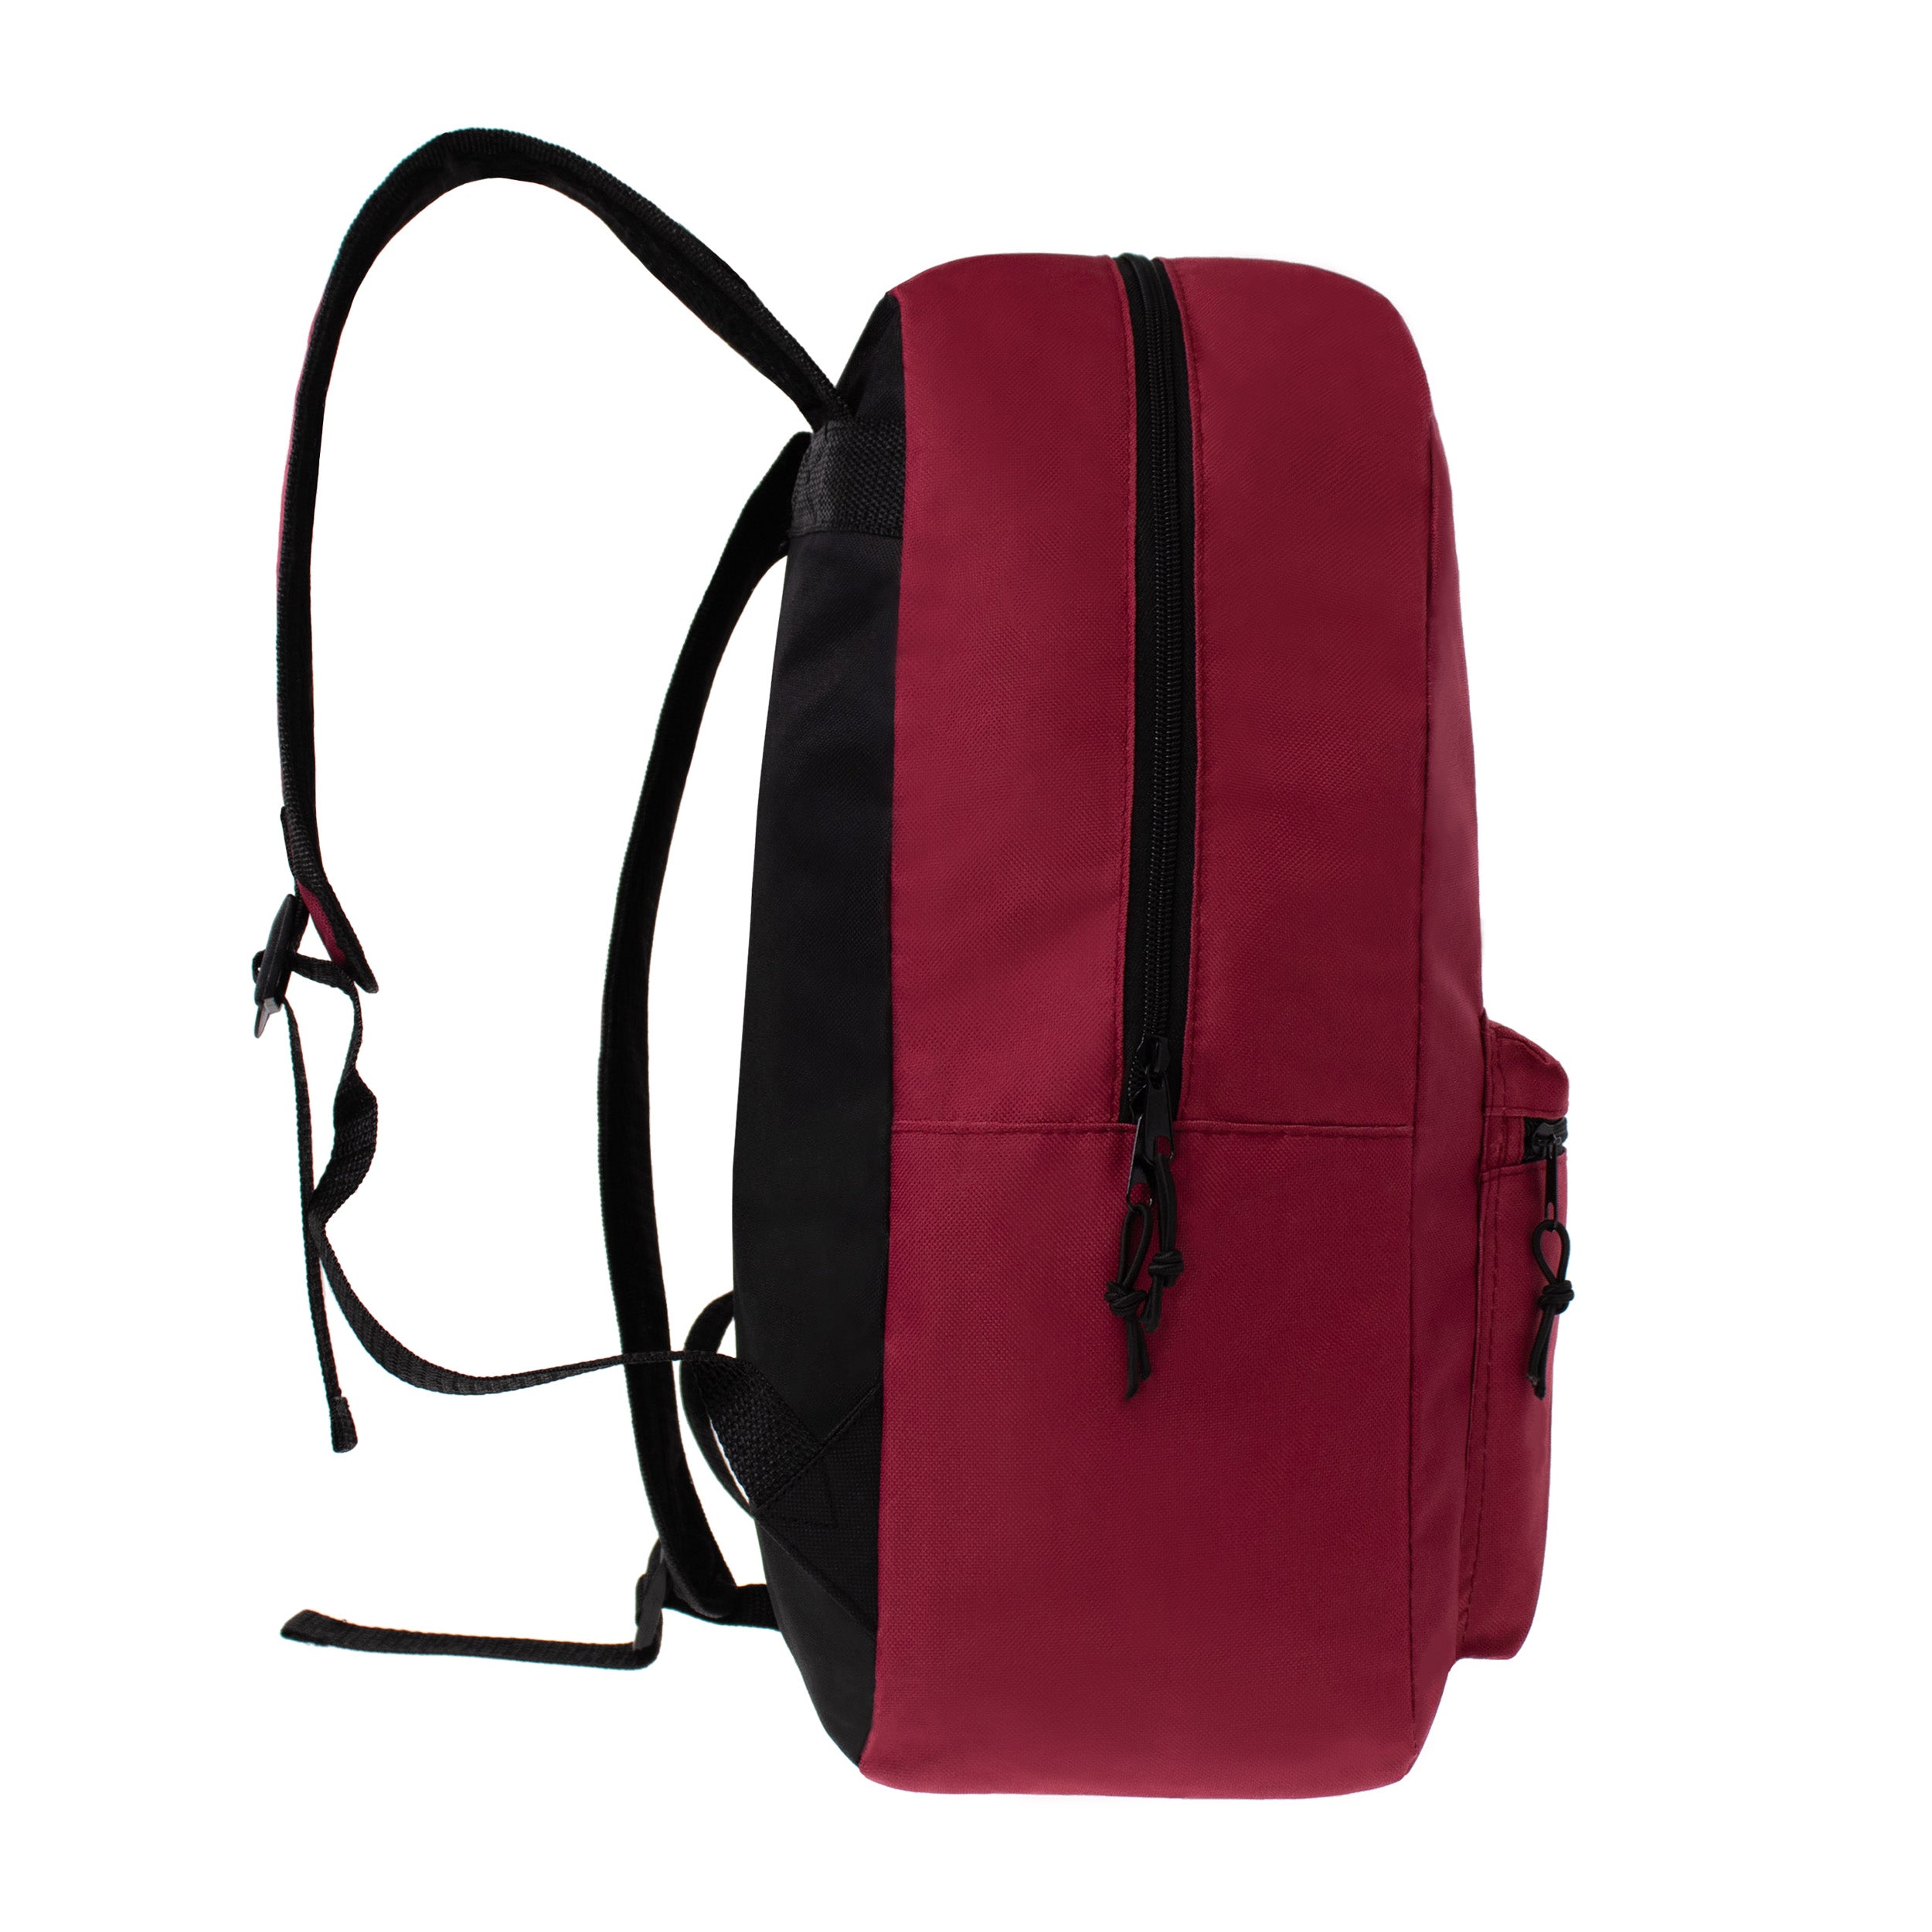 17 Inch Kids Basic Wholesale Backpack in Dark Red - Bulk Case of 24 Backpacks